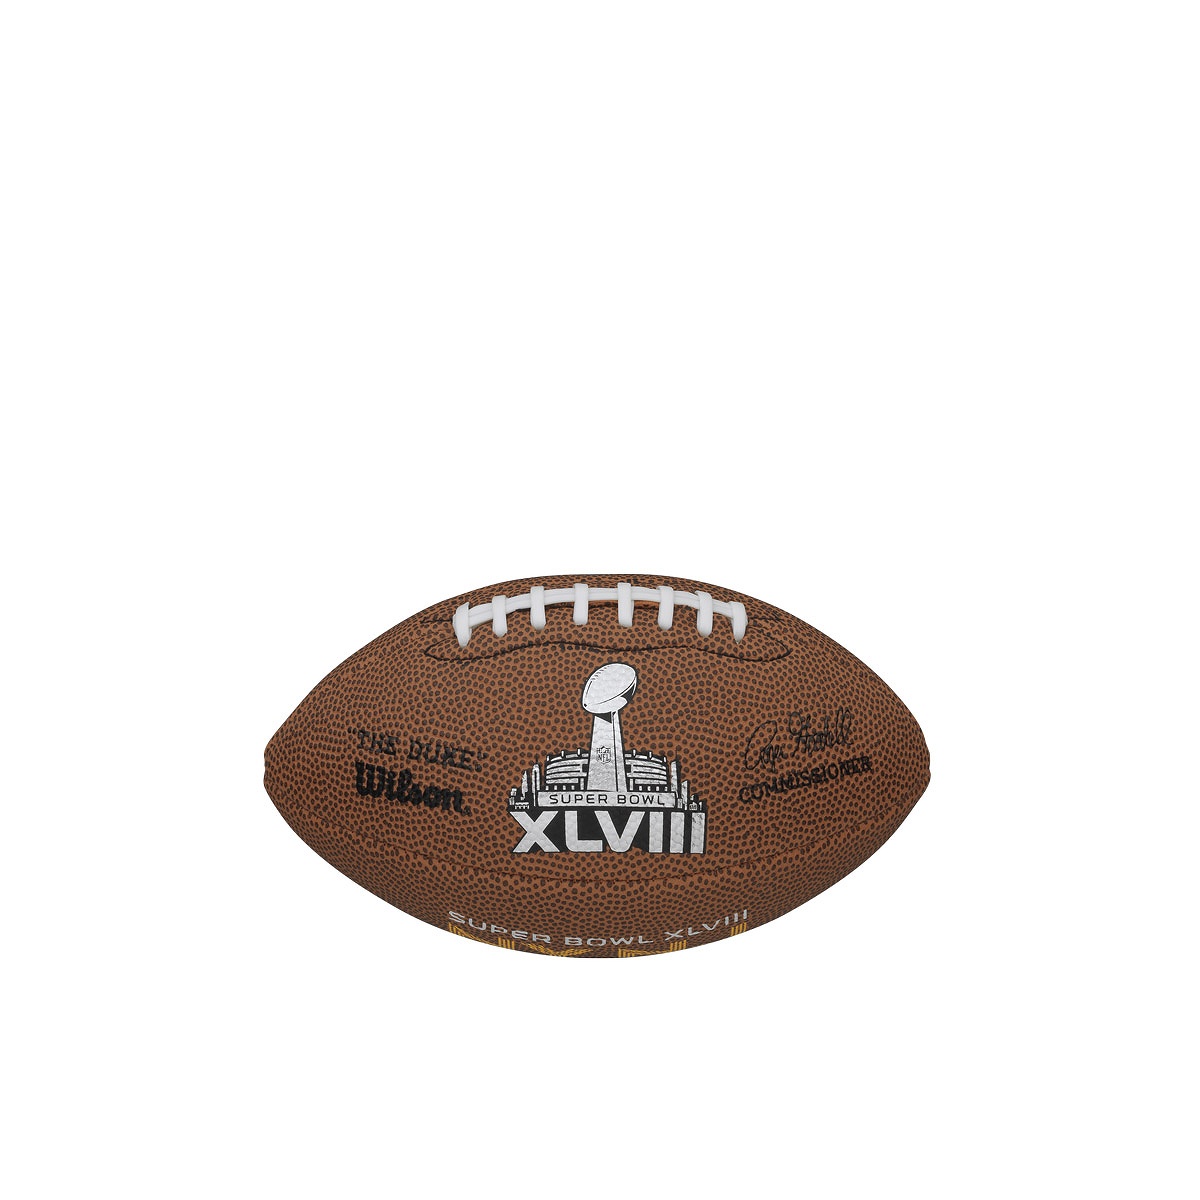 Super Bowl XLVIII     Football